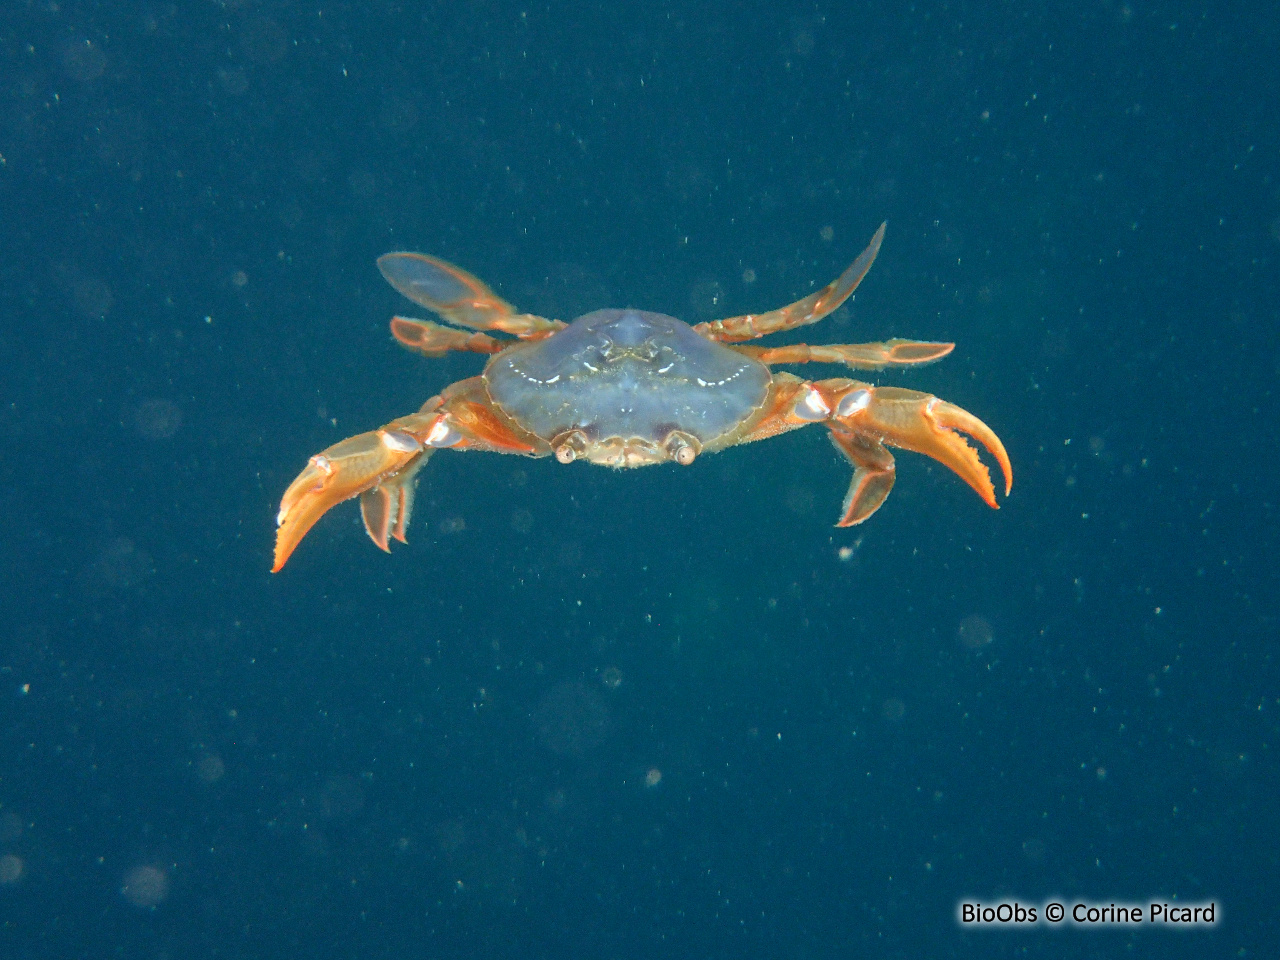 Crabe à sardine - Polybius henslowii - Corine Picard - BioObs